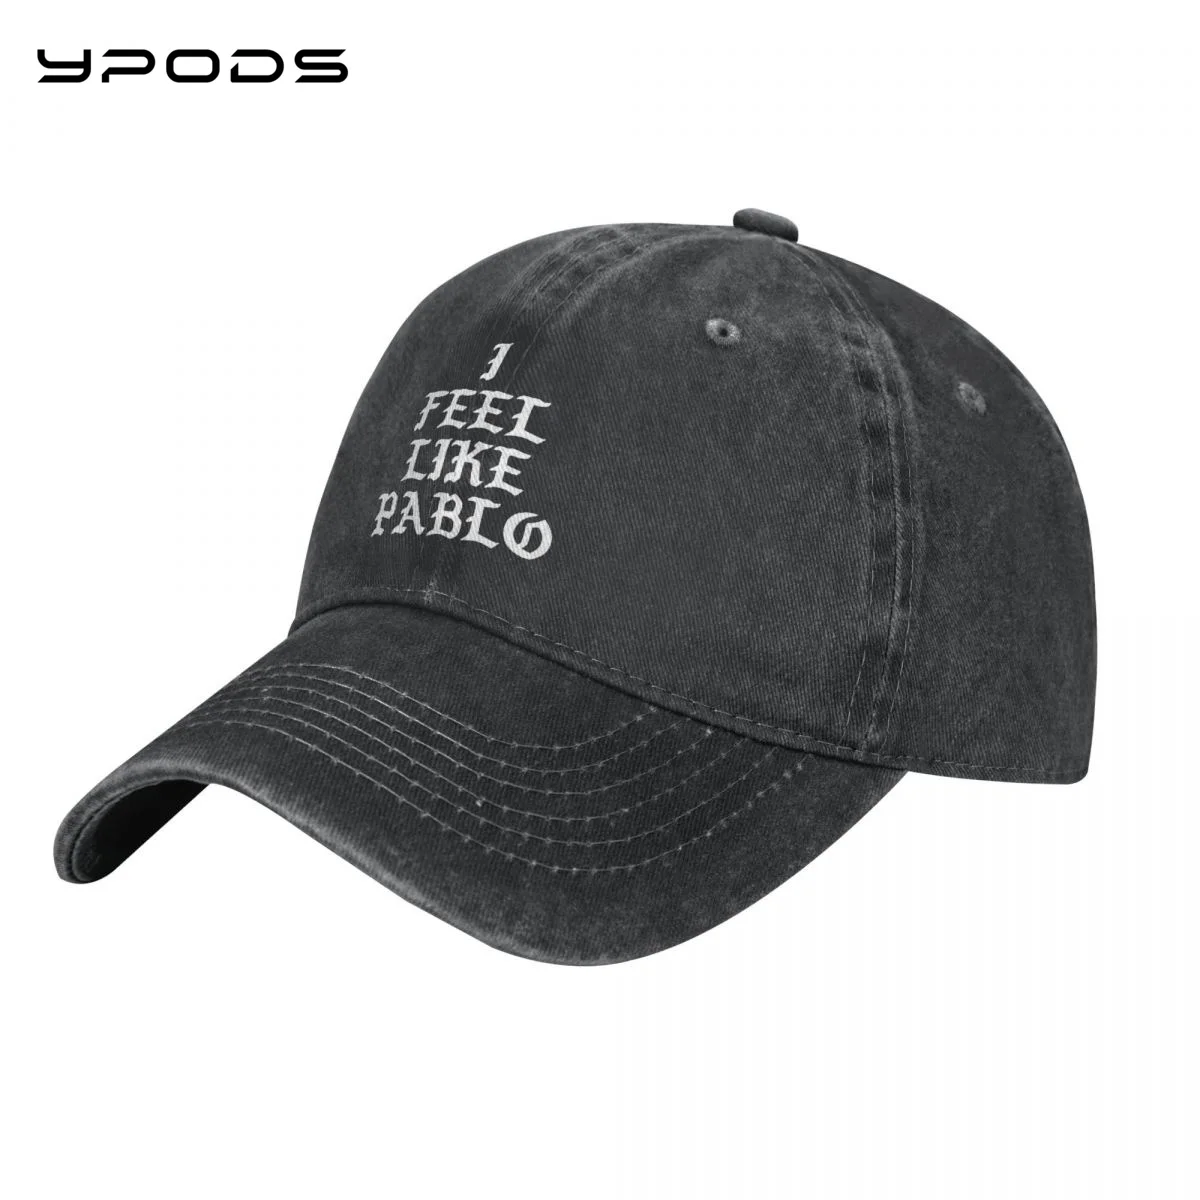 

I Feel Like Pablo Baseball Caps for Men Women Vintage Washed Cotton Dad Hats Print Snapback Cap Hat